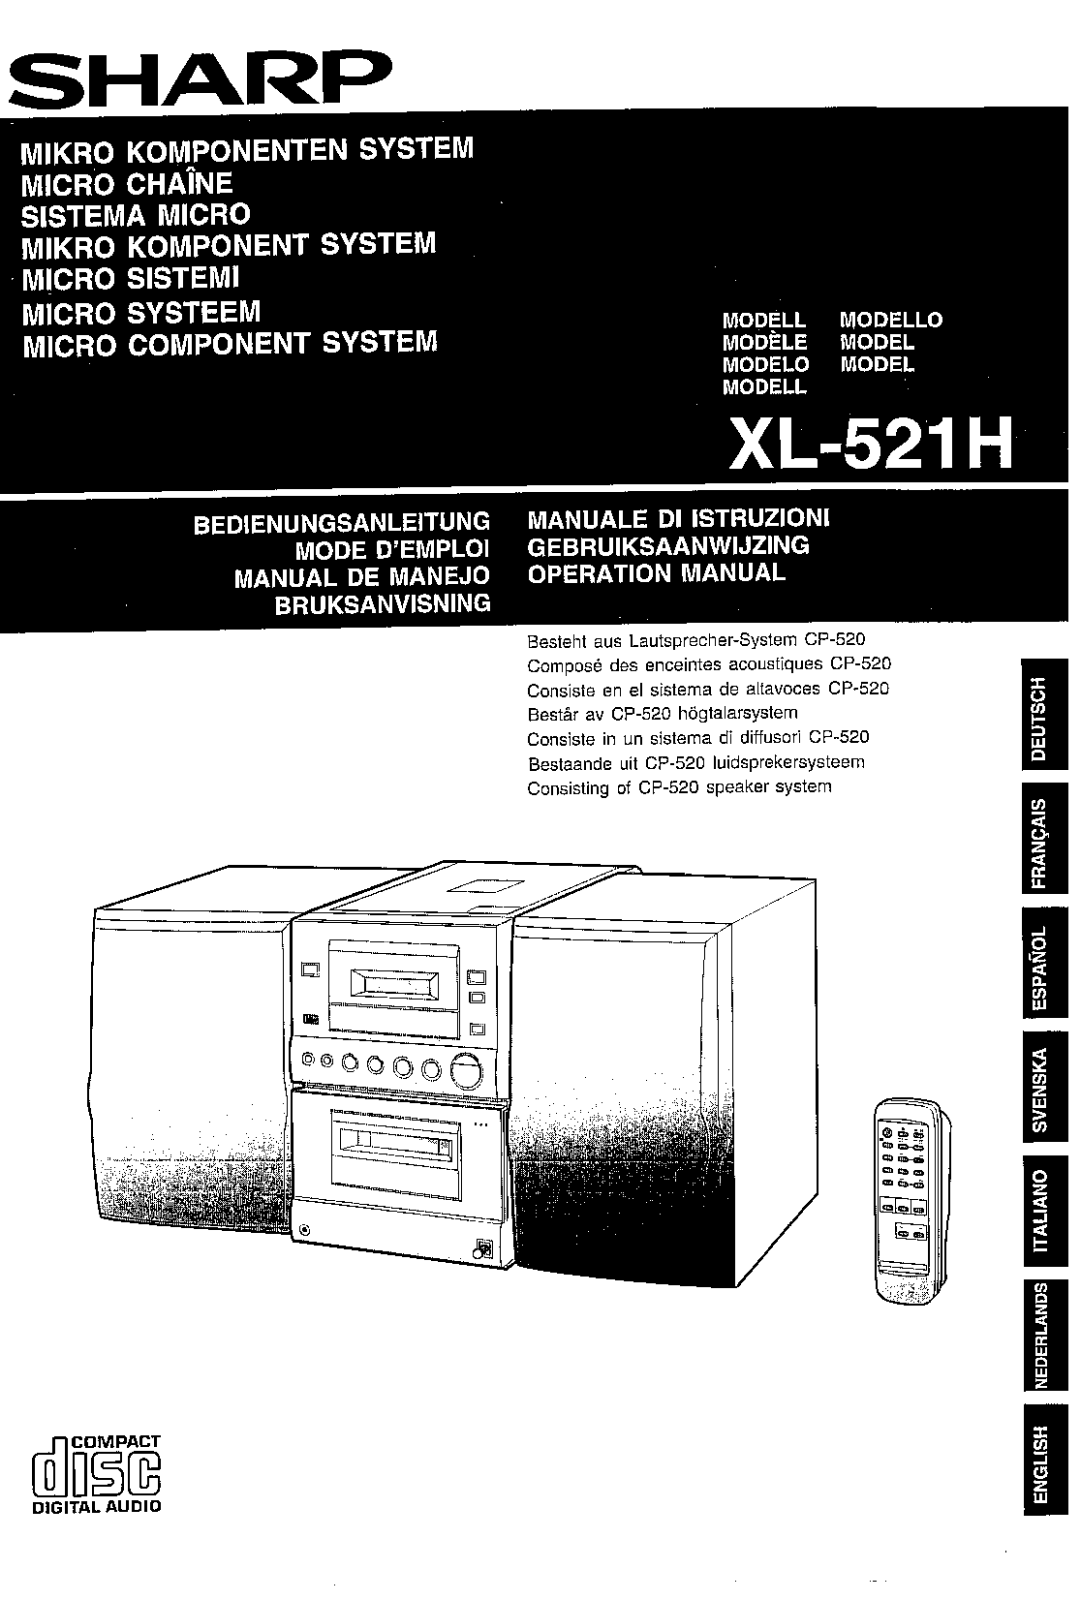 Sharp XL-521H Manual